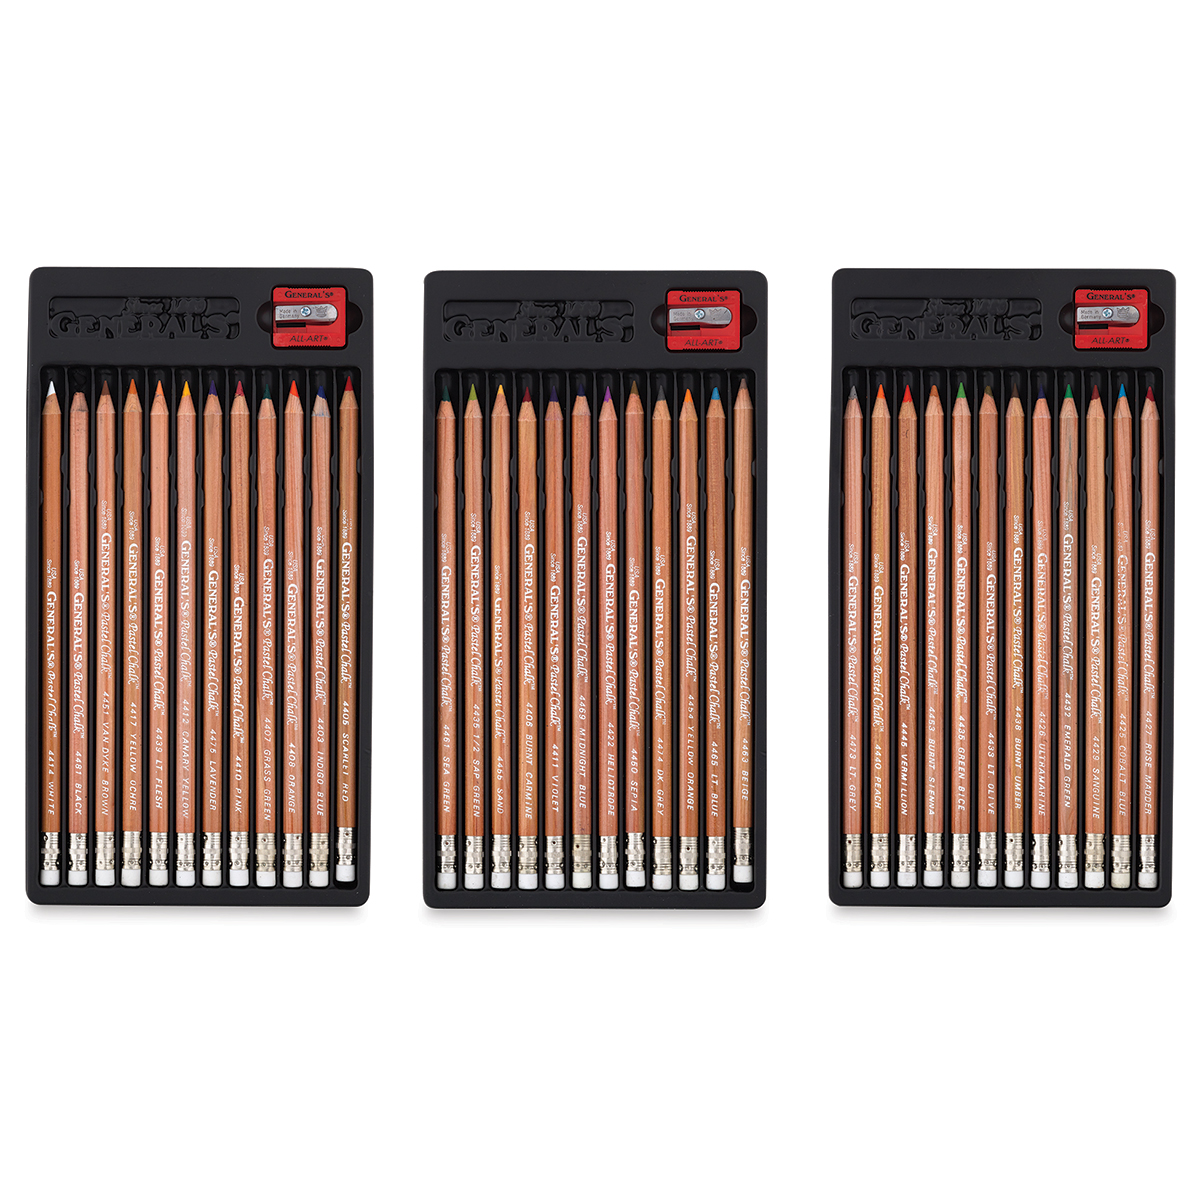 General's Multipastel (r) Chalk Pencils 36/pkg-assorted Colors : Target